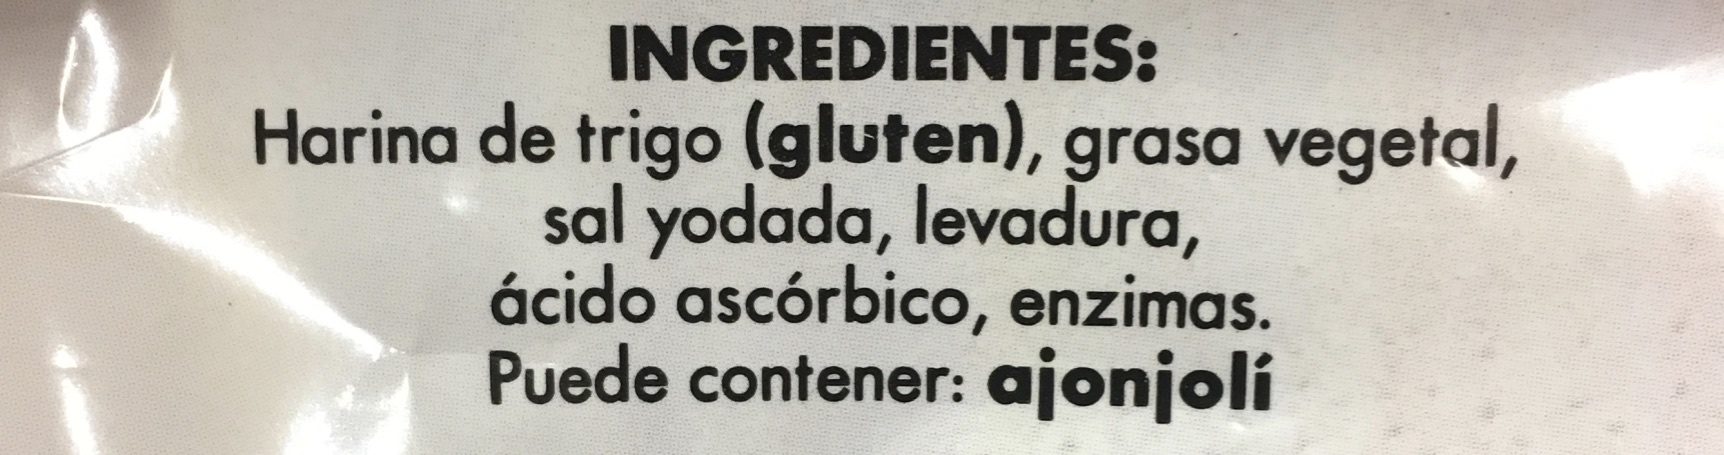 Tostis panecitos - Ingredients - es